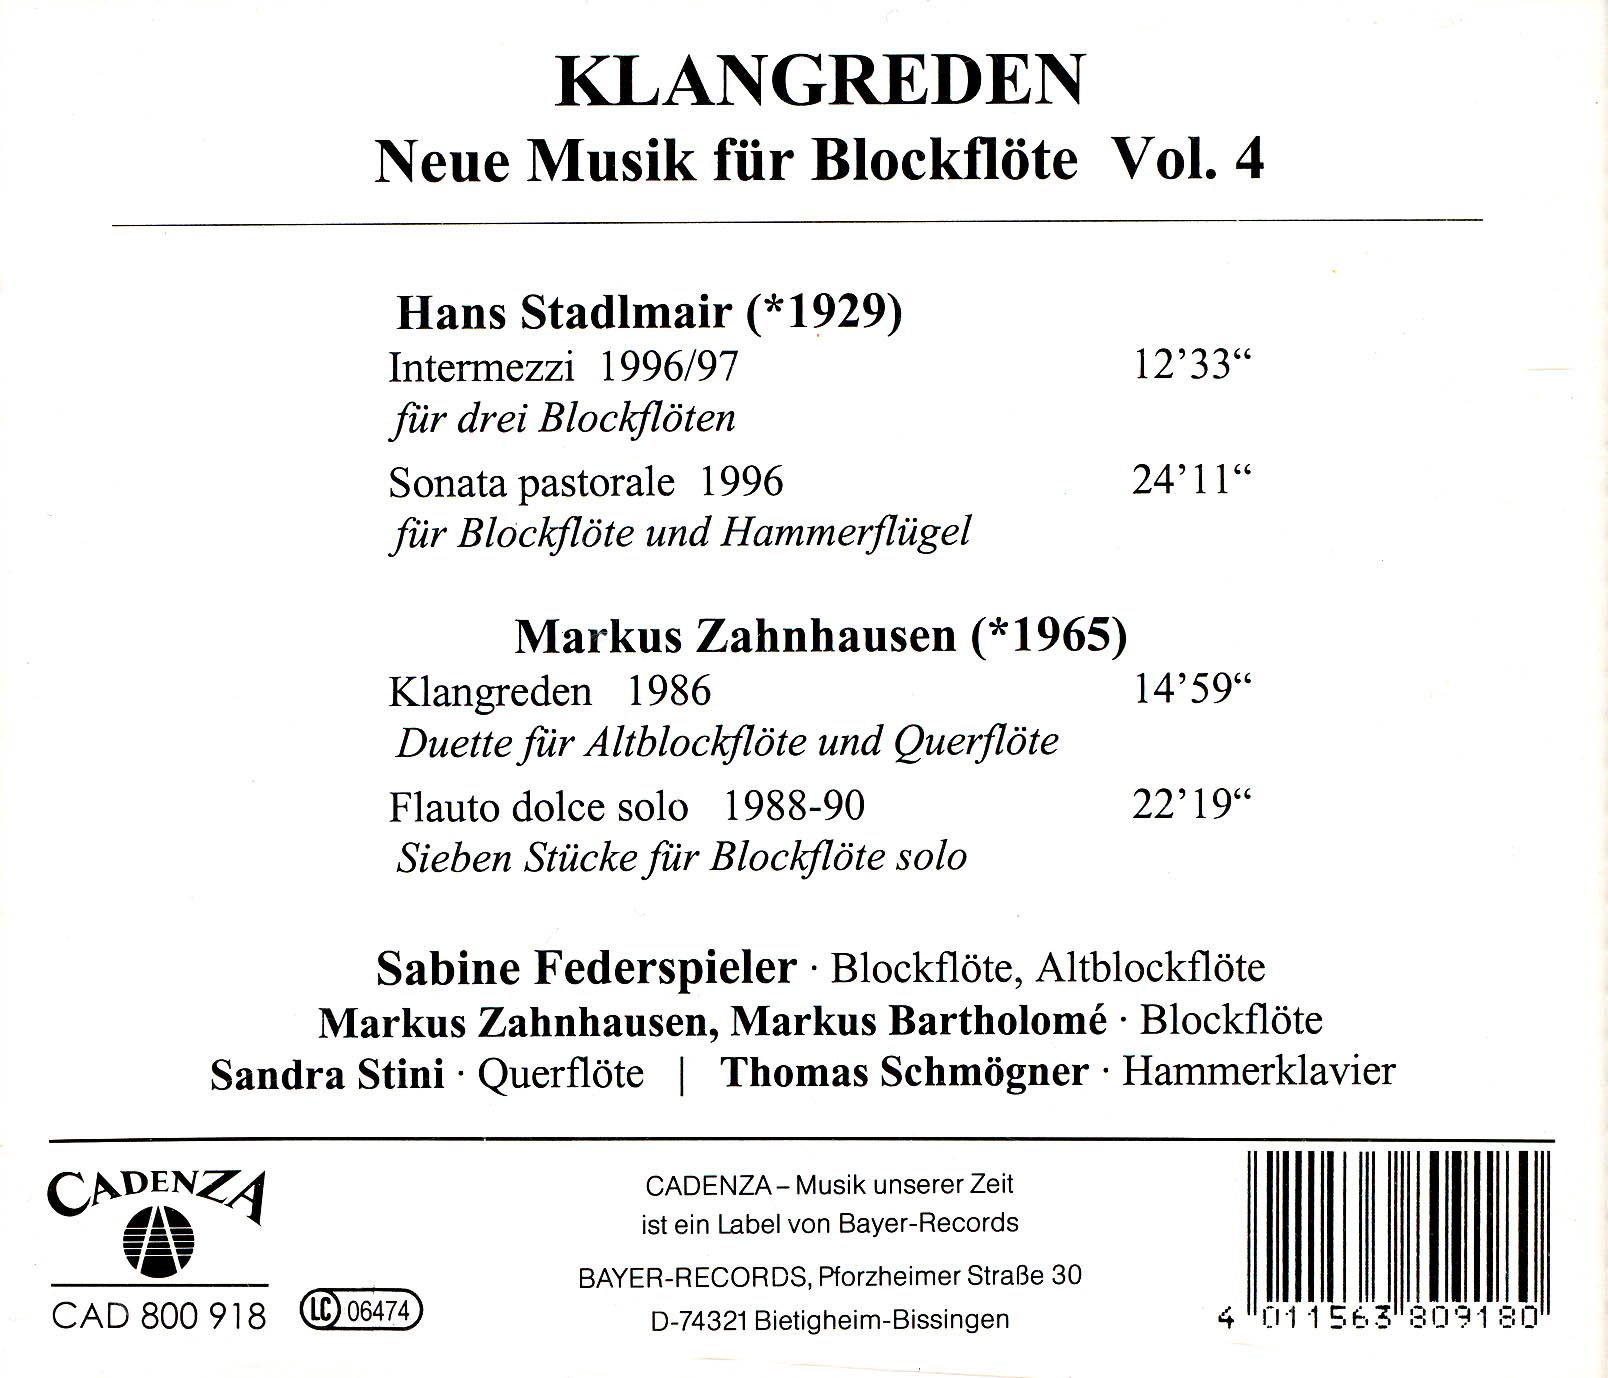 Klangreden - Neue Musik für BlockflöteVol.4